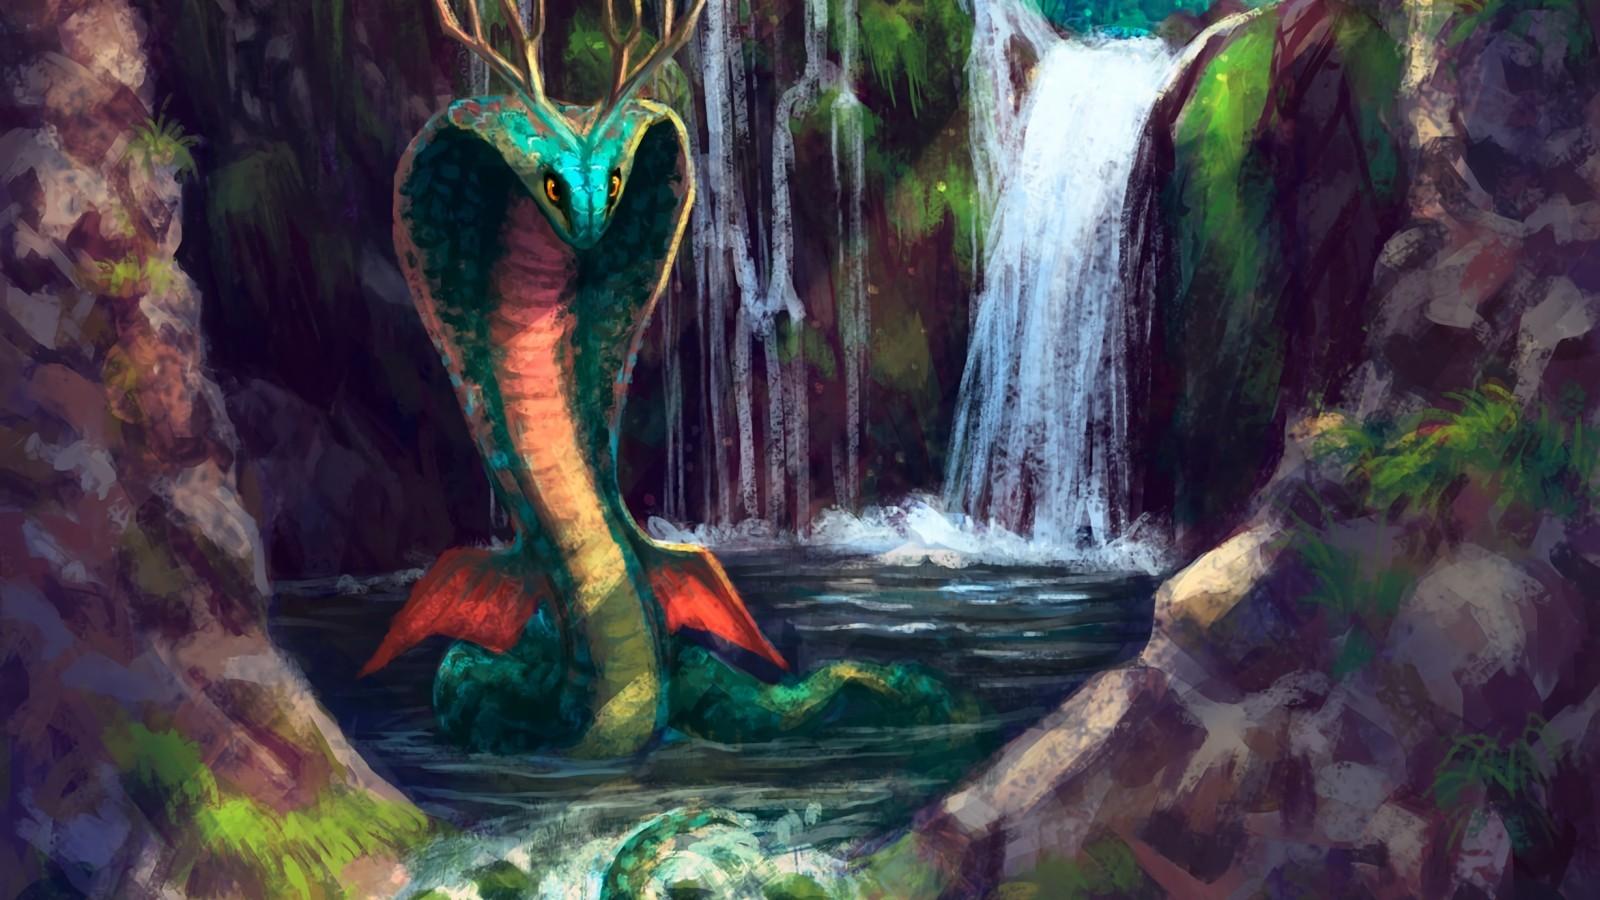 Download 1600x900 Giant Sneak, Serpent, Waterfall, Forest, Artwork